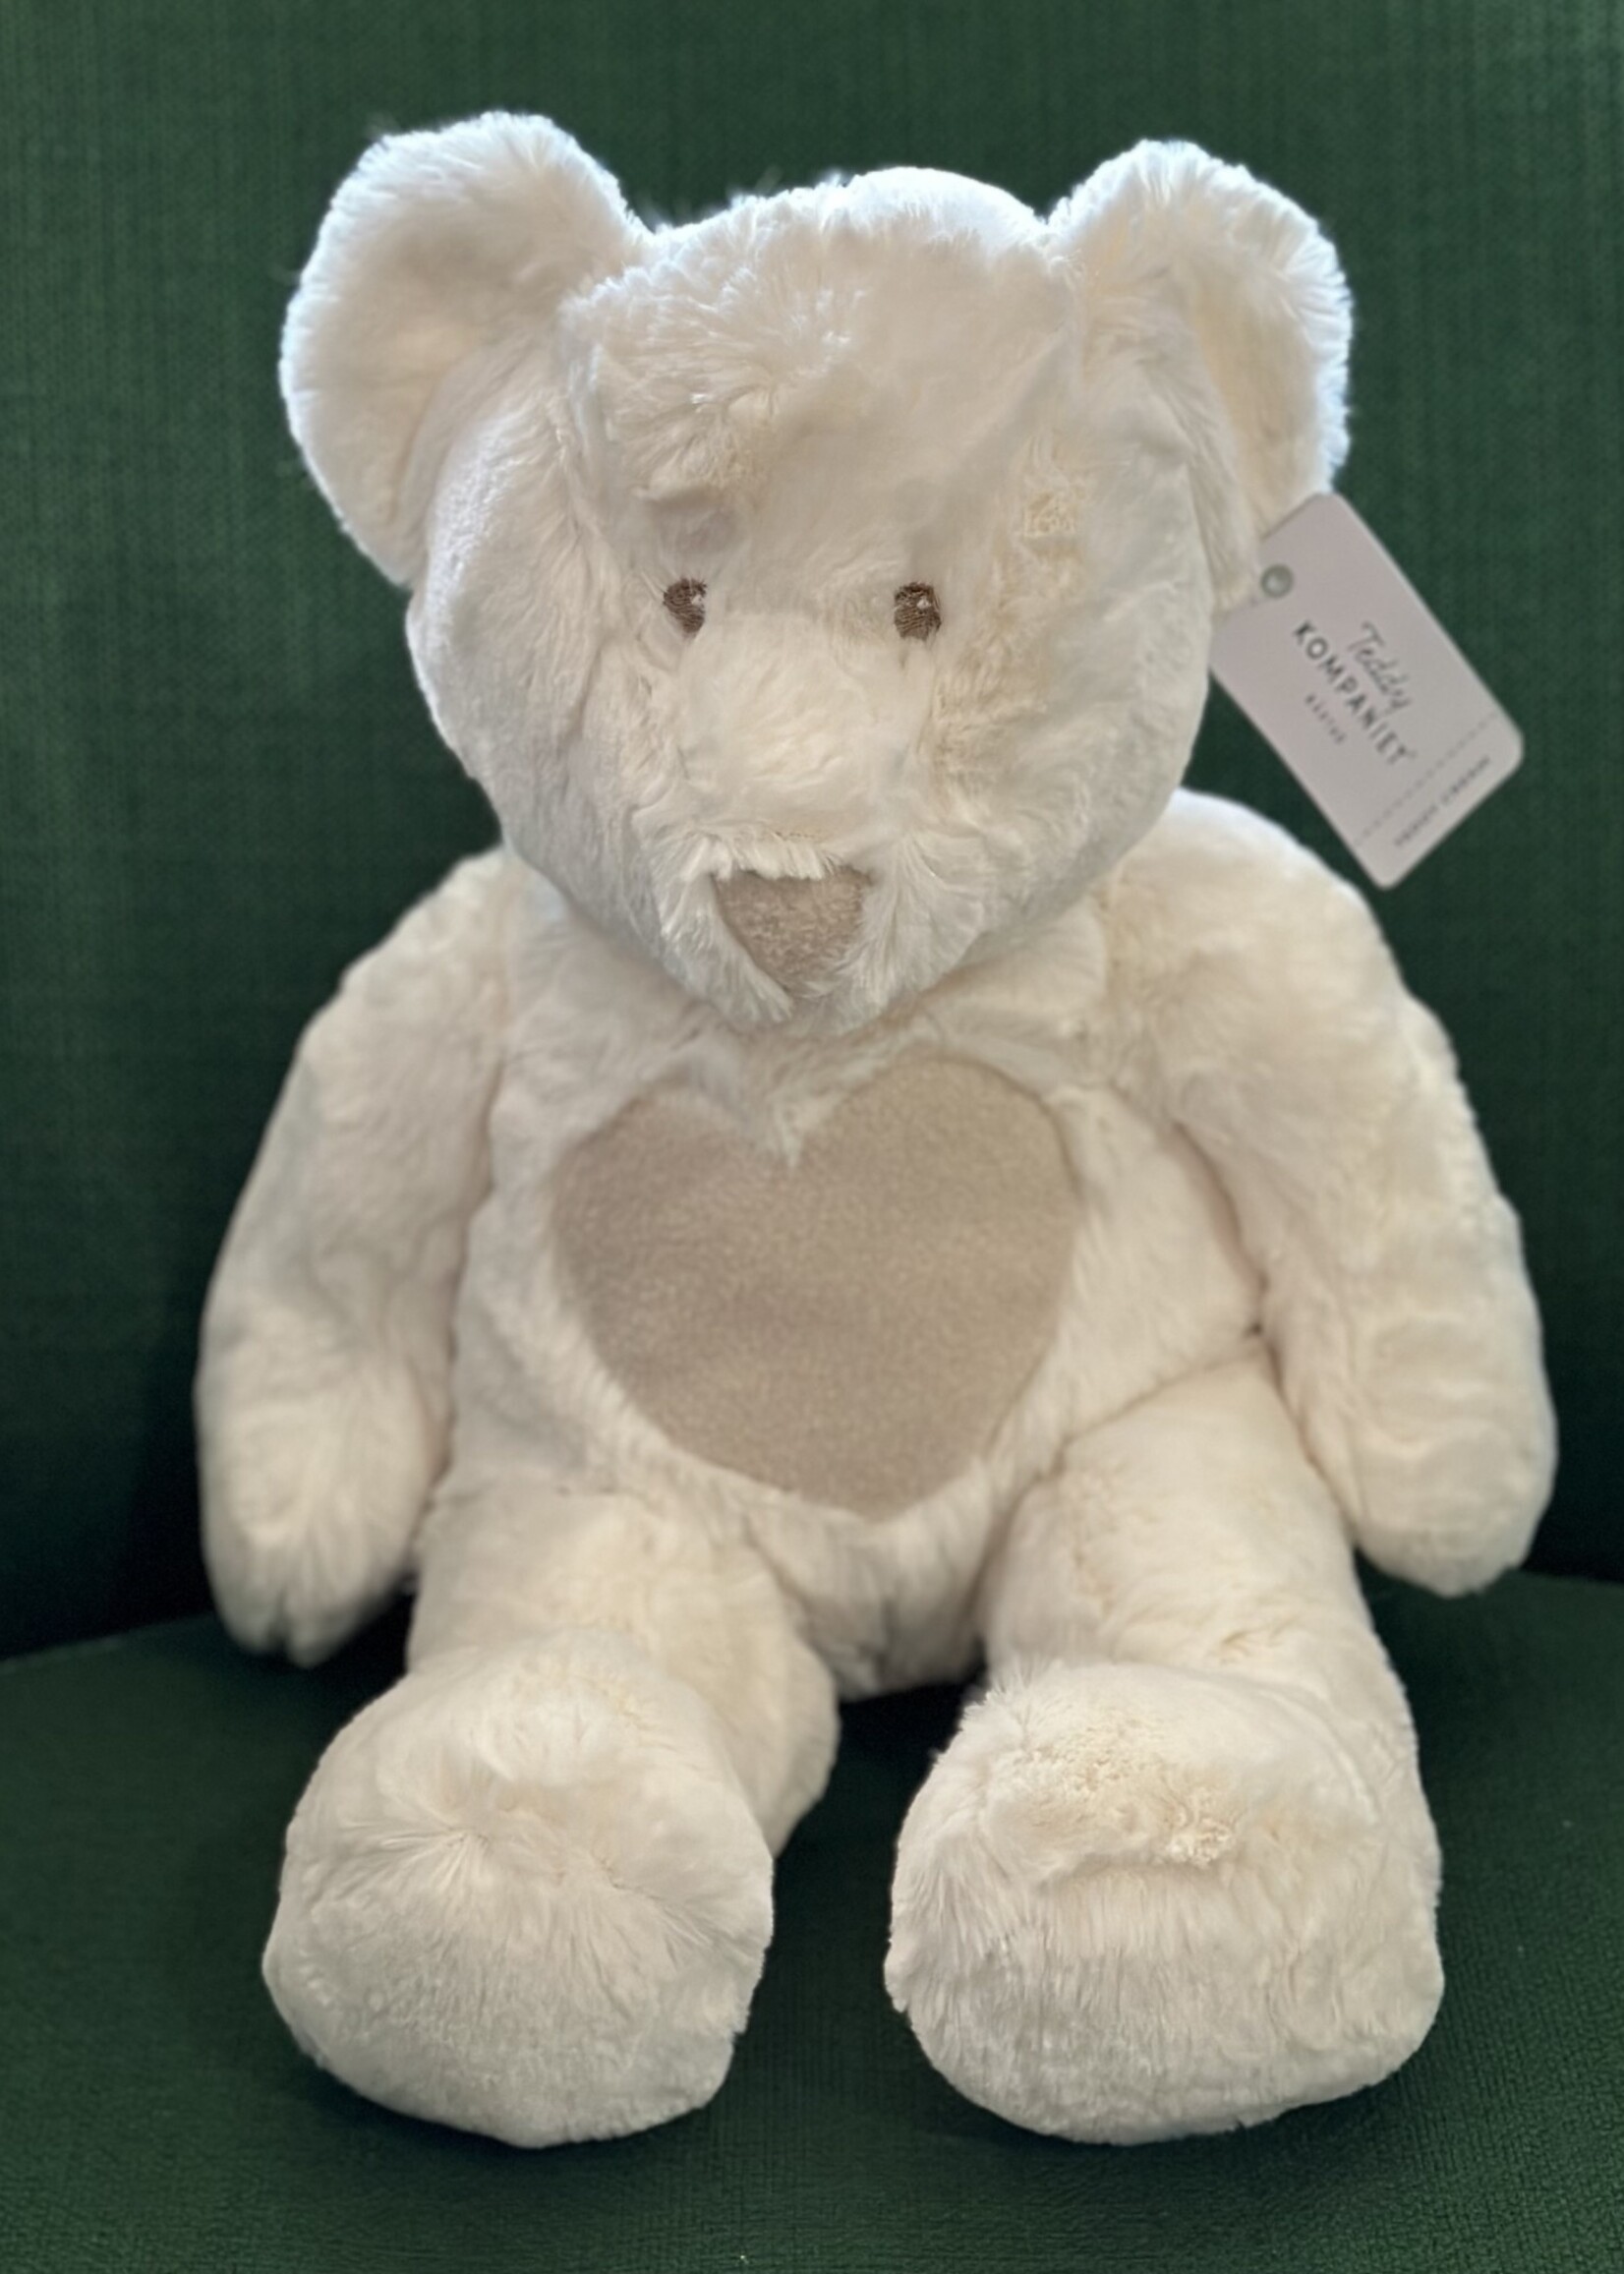 Stuffy - White Teddy Cream Bear